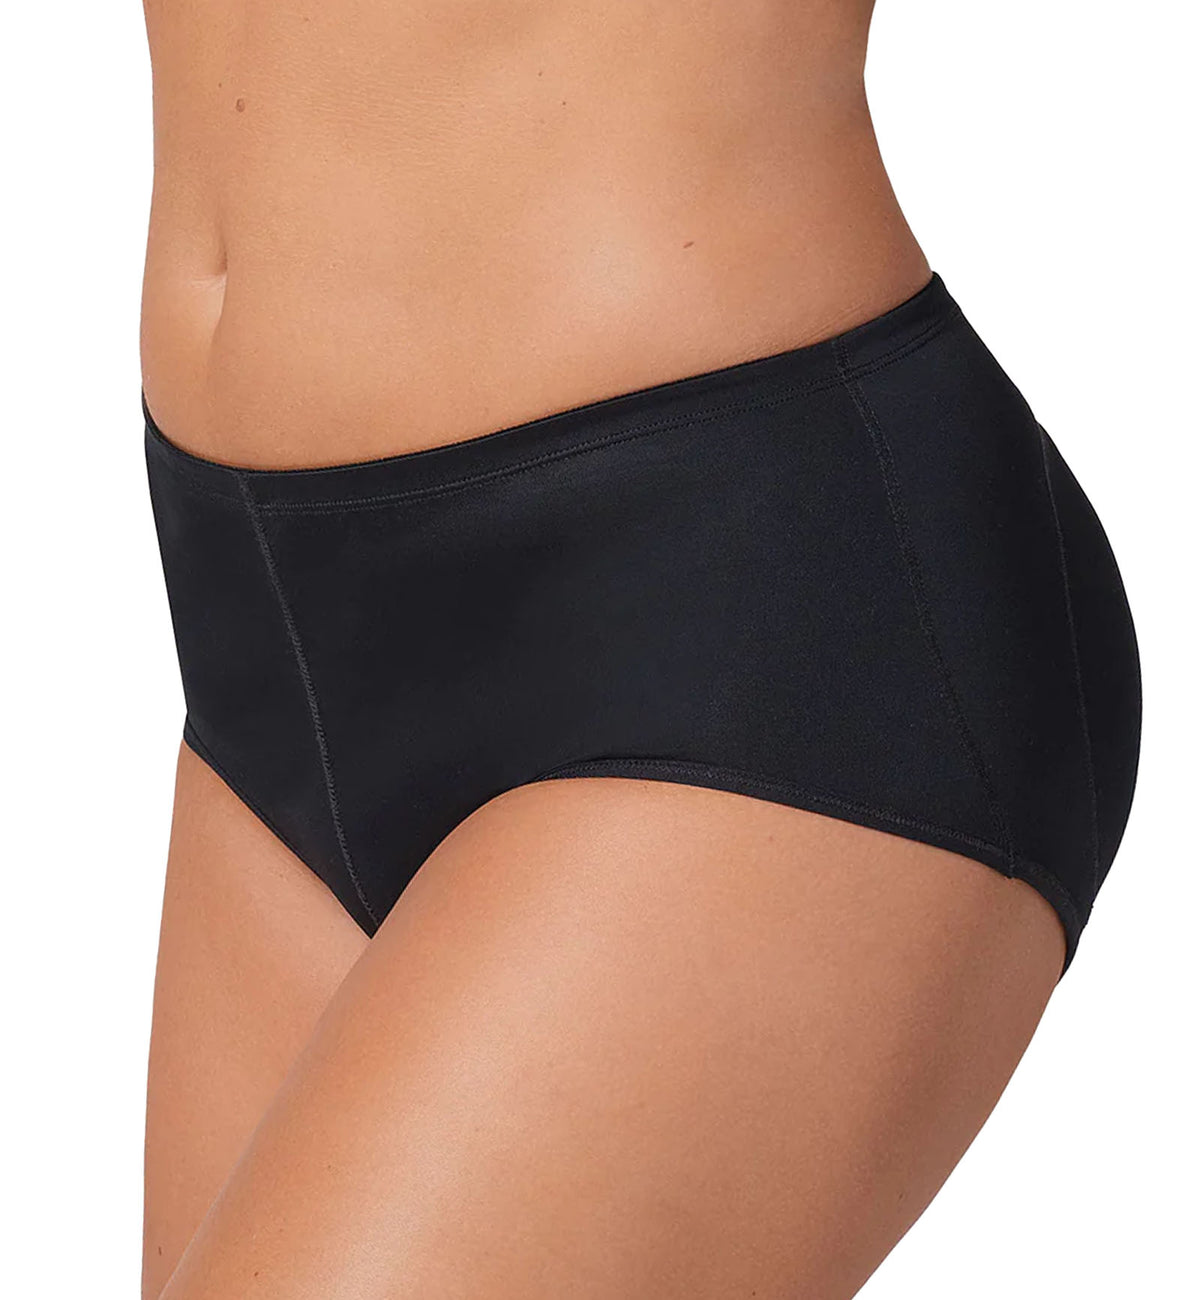 Leonisa Magic Instant Butt Lift Padded Panty (012688),Small,Black - Black,Small